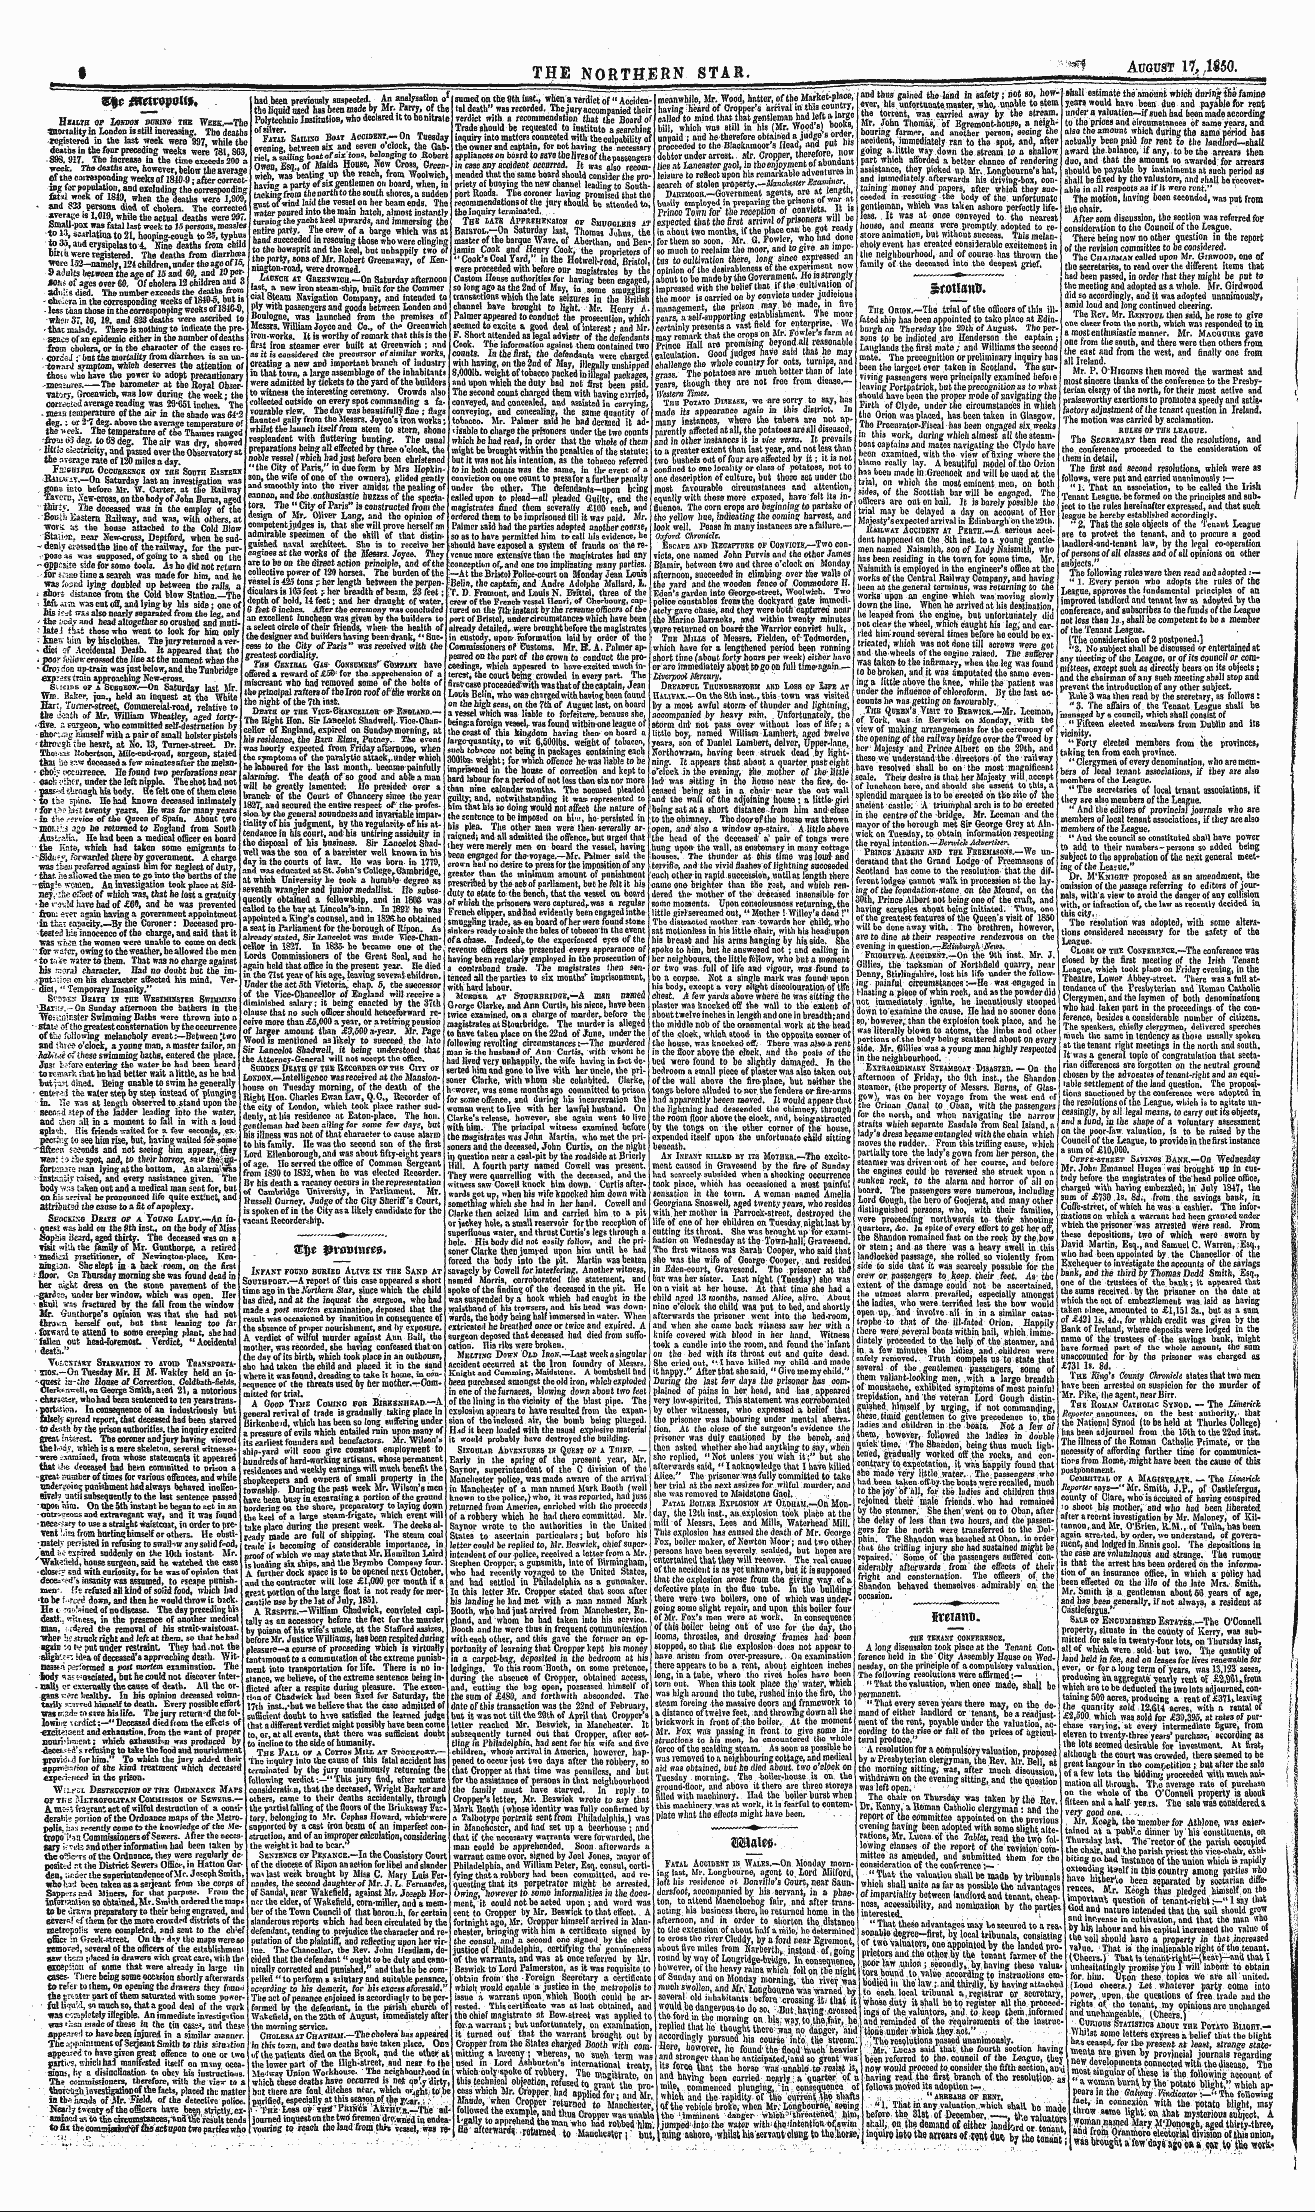 Northern Star (1837-1852): jS F Y, 3rd edition - Soman!*.